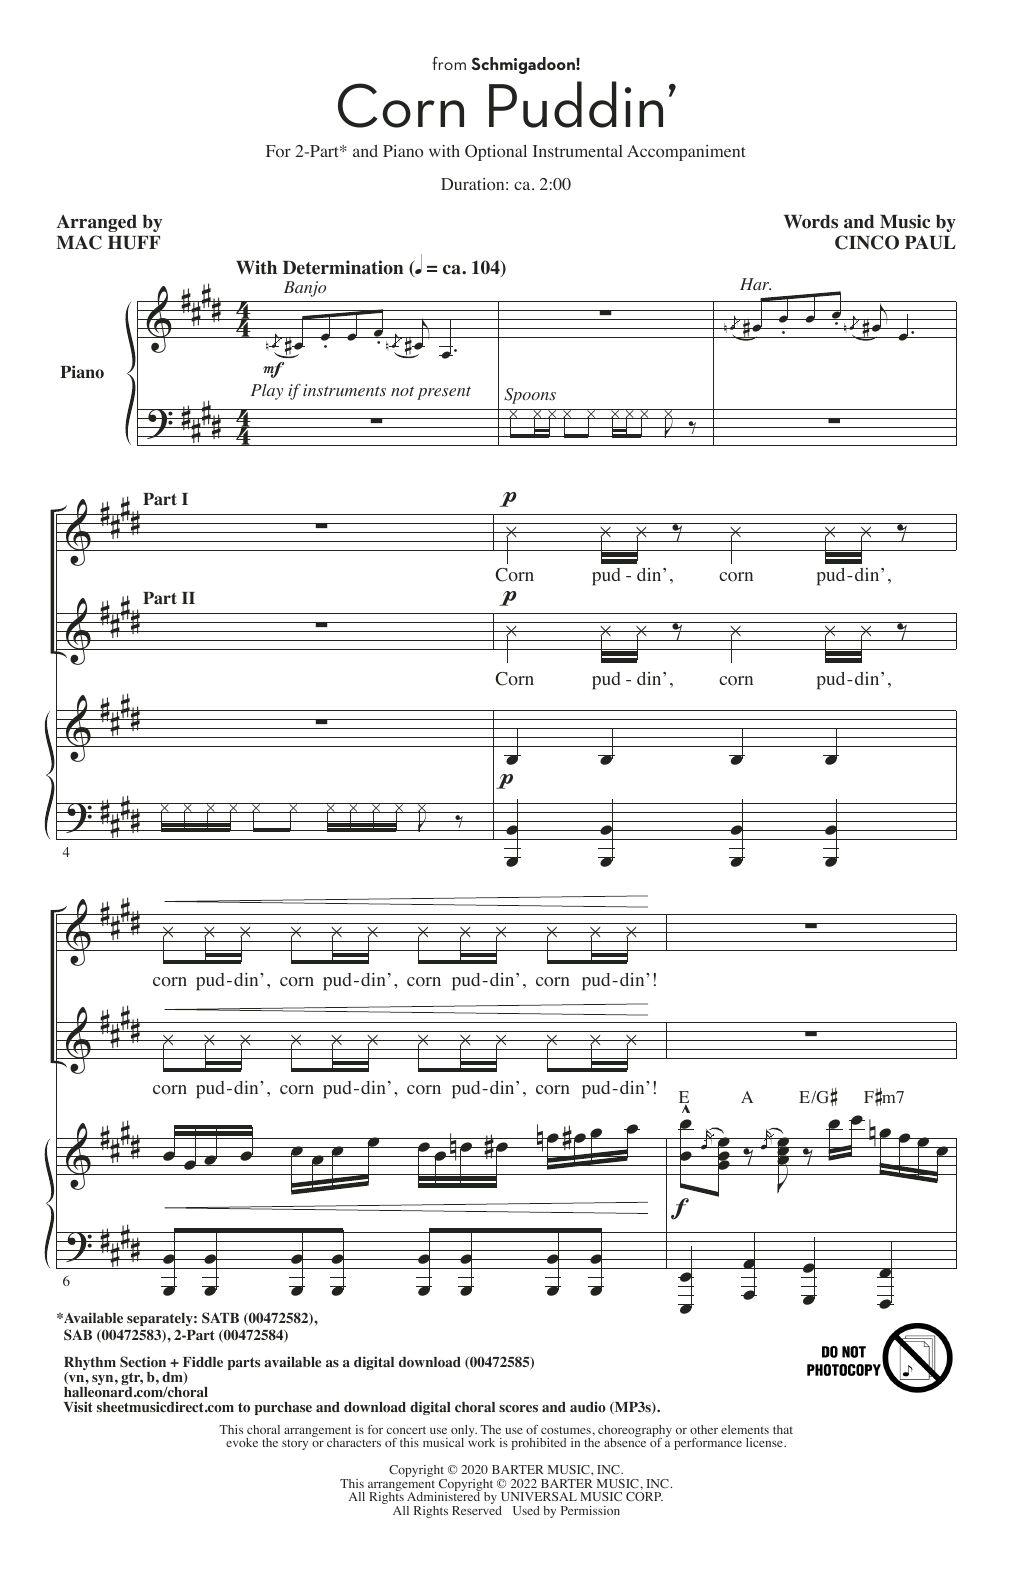 Cinco Paul Corn Puddin' (from Schmigadoon!) (arr. Mac Huff) Sheet Music Notes & Chords for 2-Part Choir - Download or Print PDF